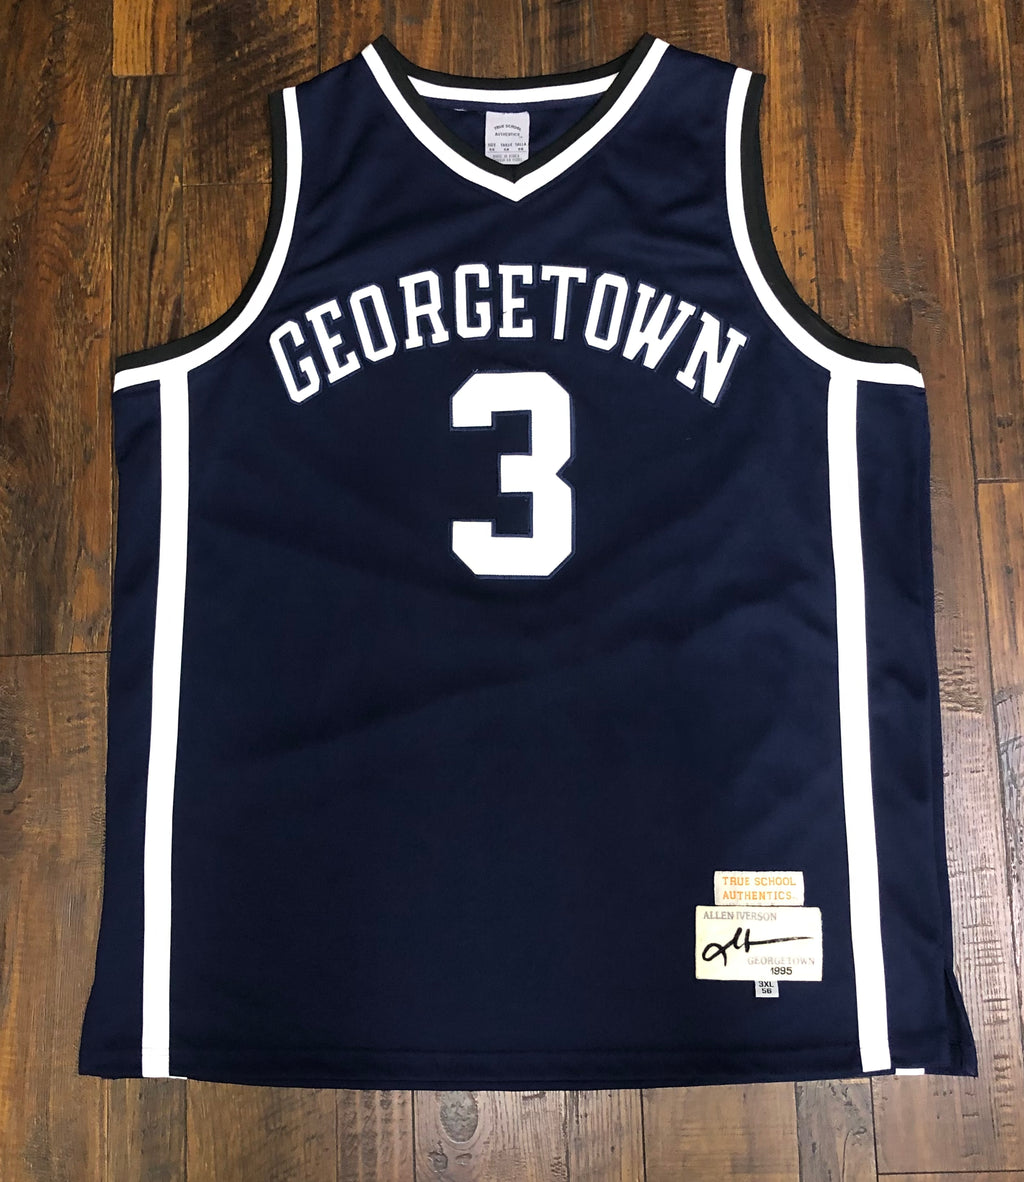 Georgetown basketball gets new black uniforms